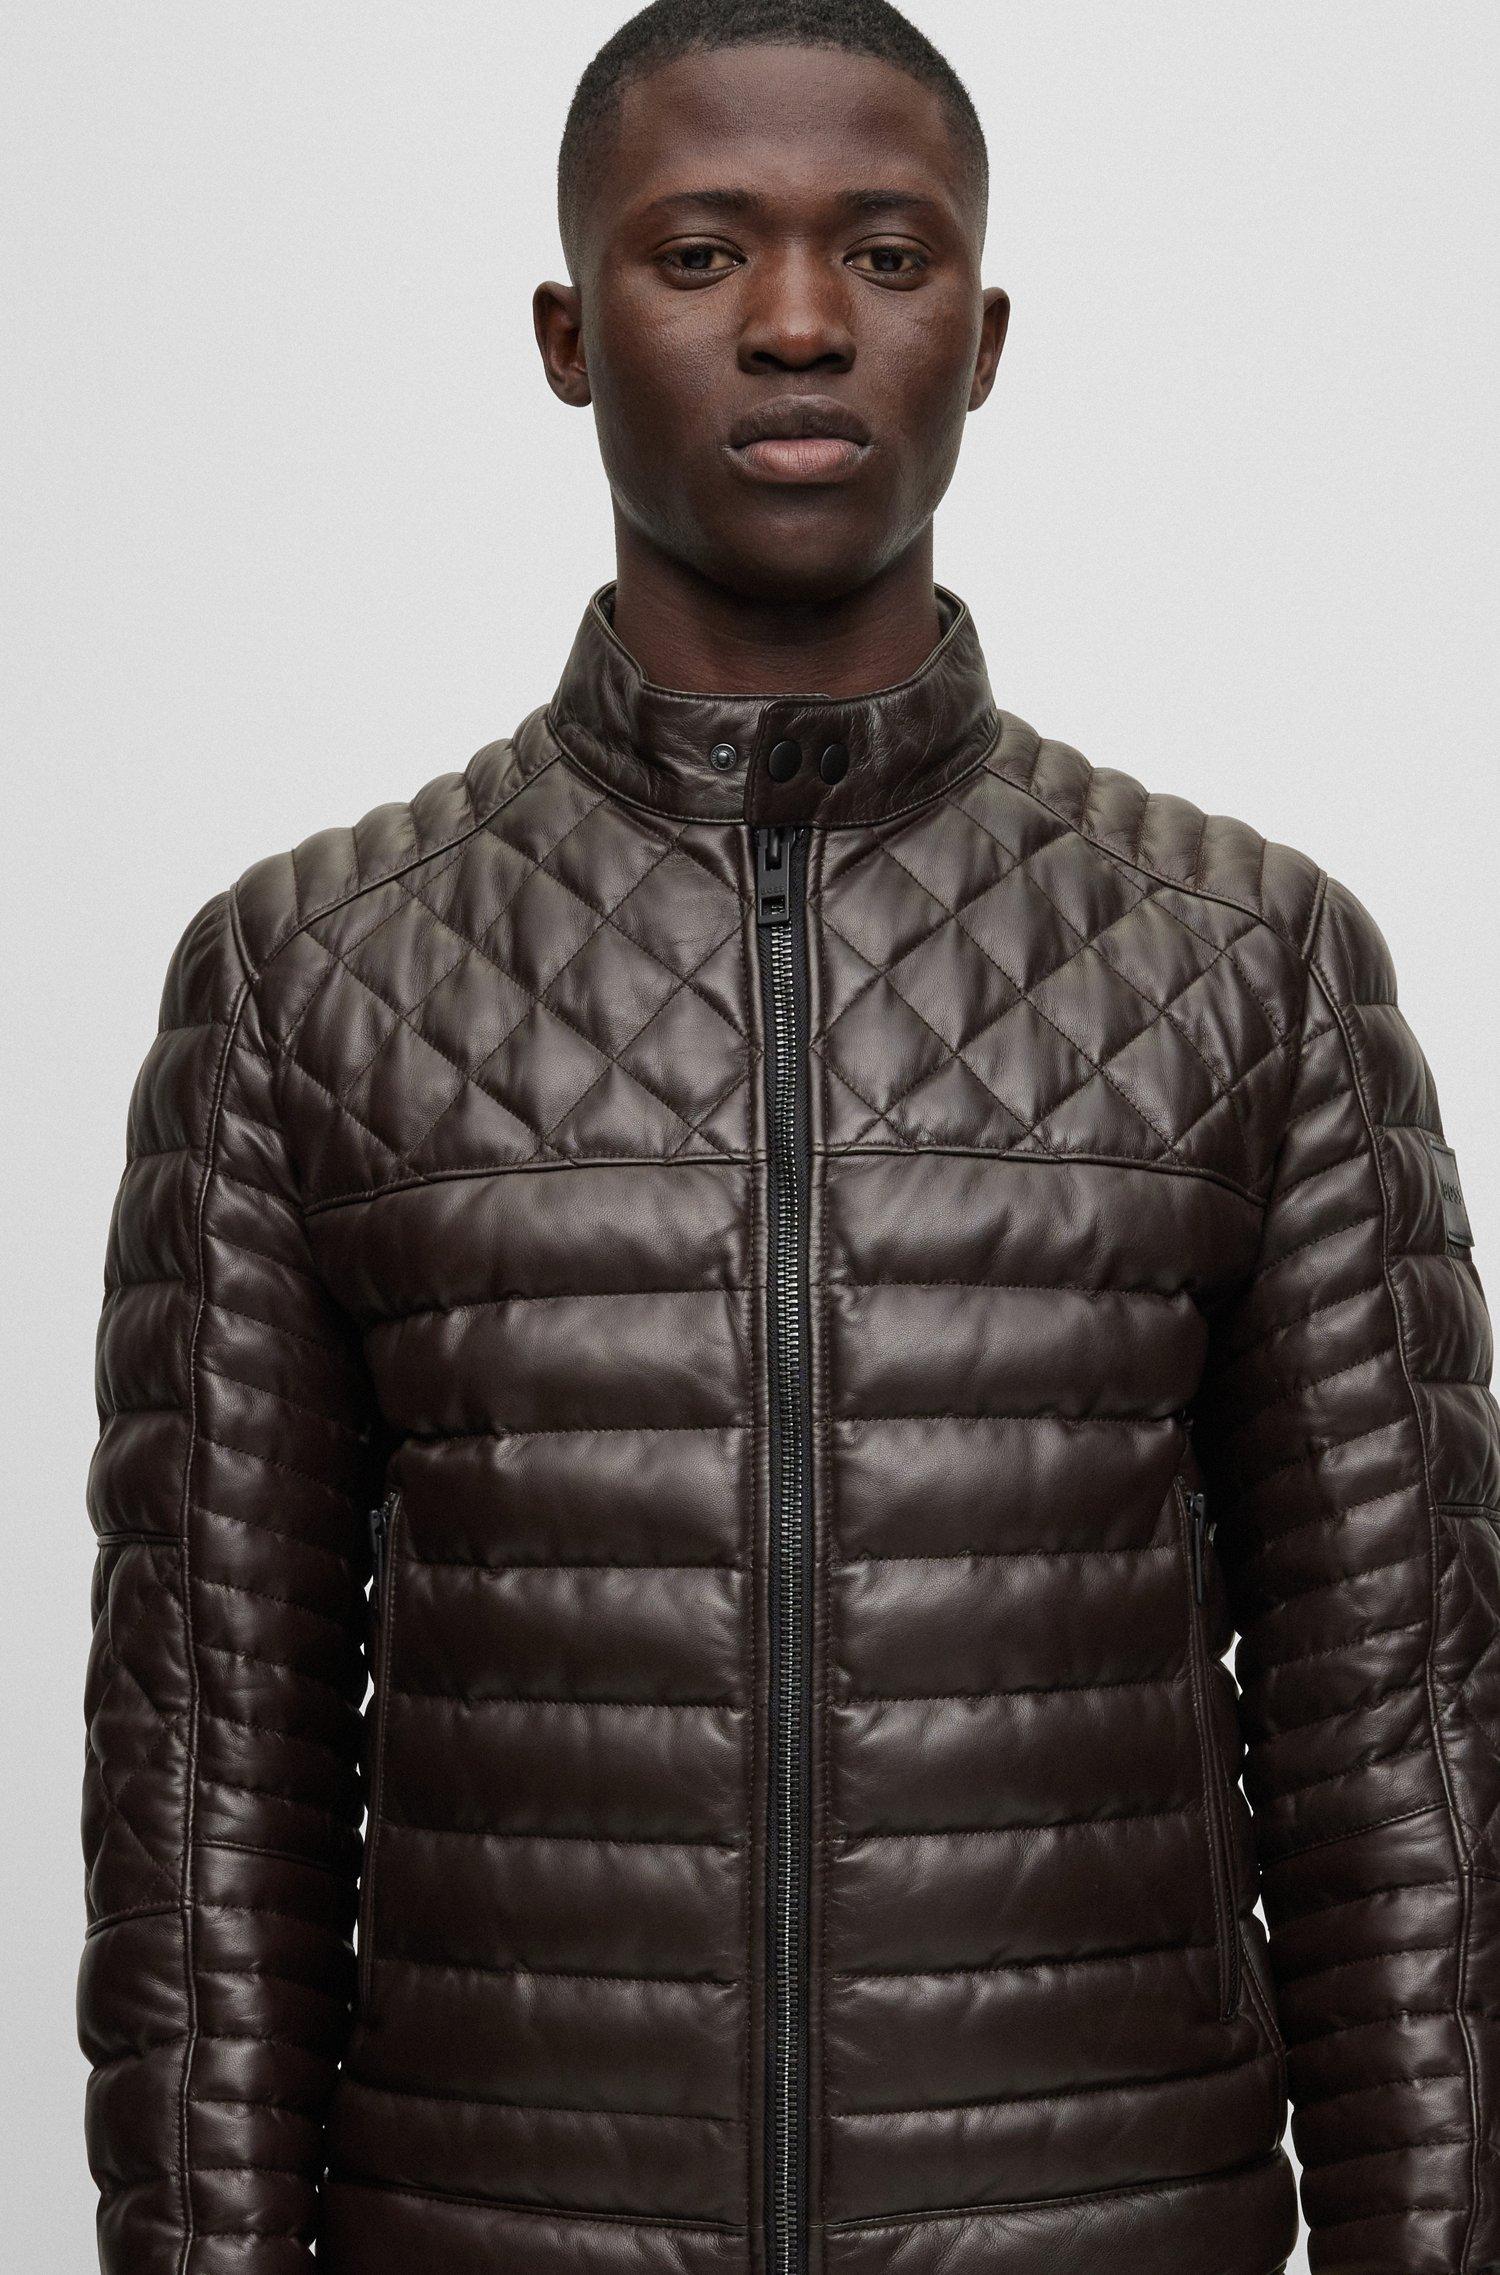 BOSS by HUGO BOSS Nappa Leather Jacket in Black for Men | Lyst UK